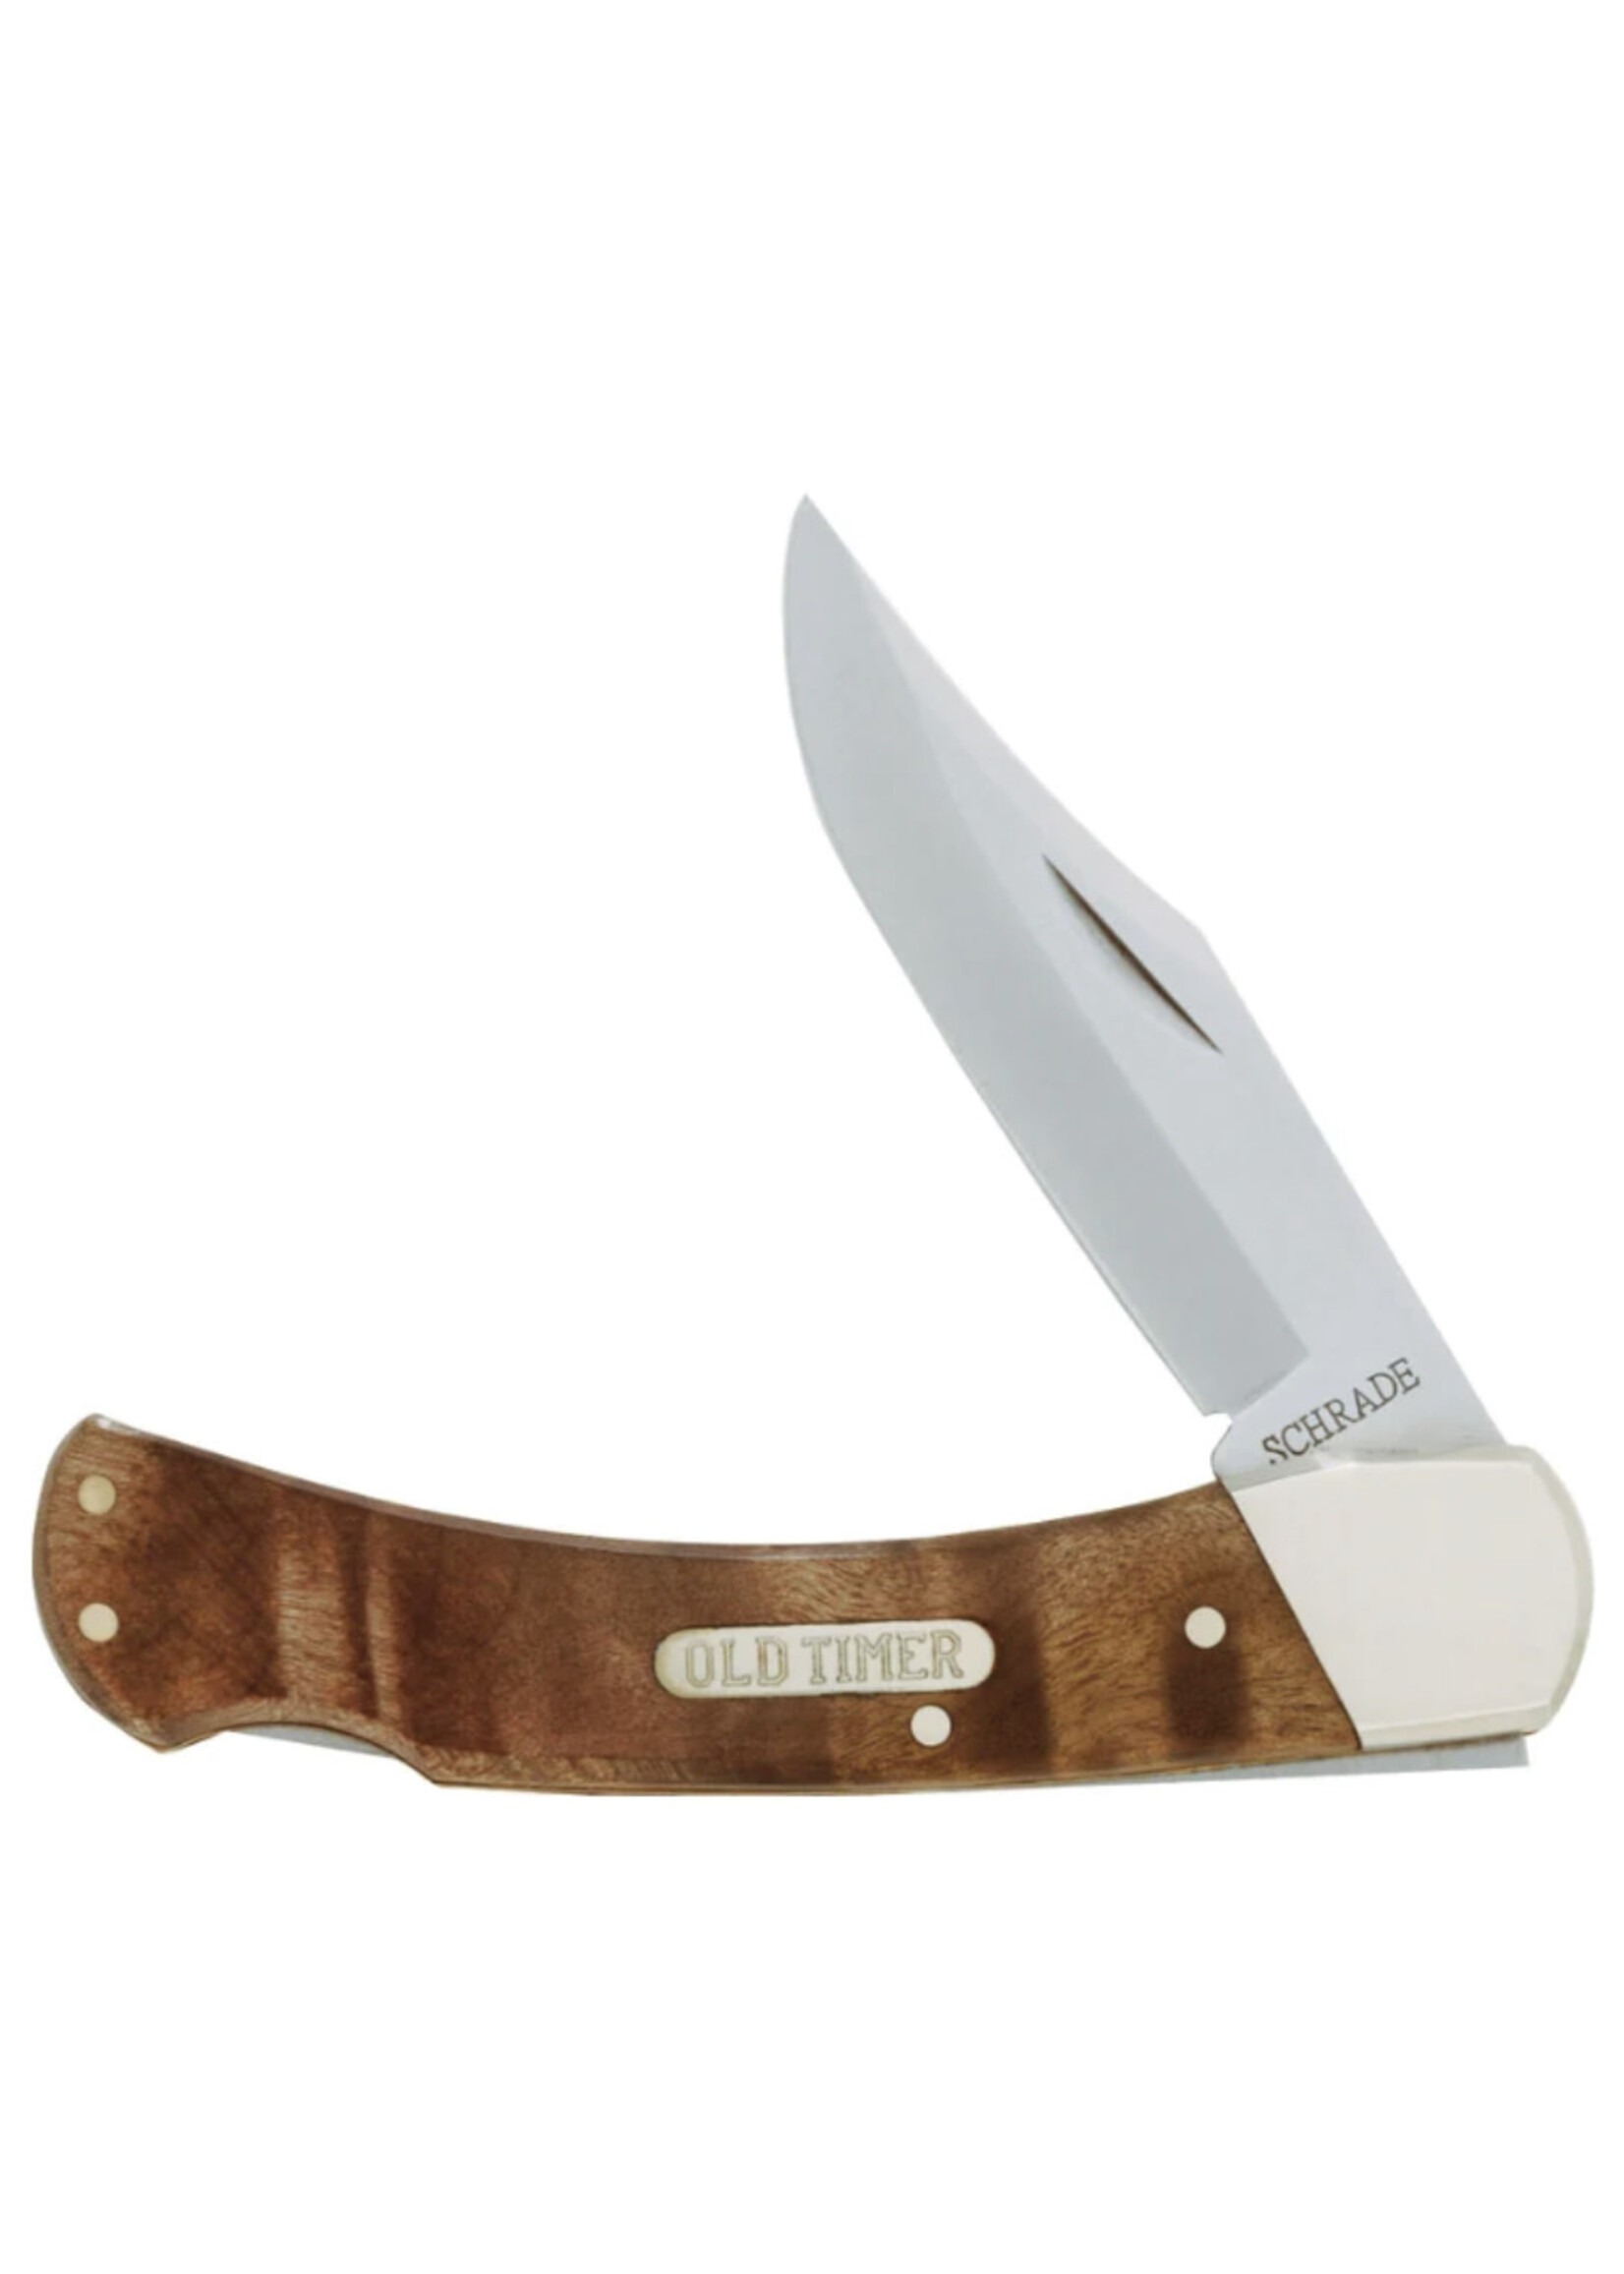 Old Timer OLD TIMER GOLDEN BEAR LOCKBACK FOLDING KNIFE 3.9” BLADE W/ LEATHER SHEATH